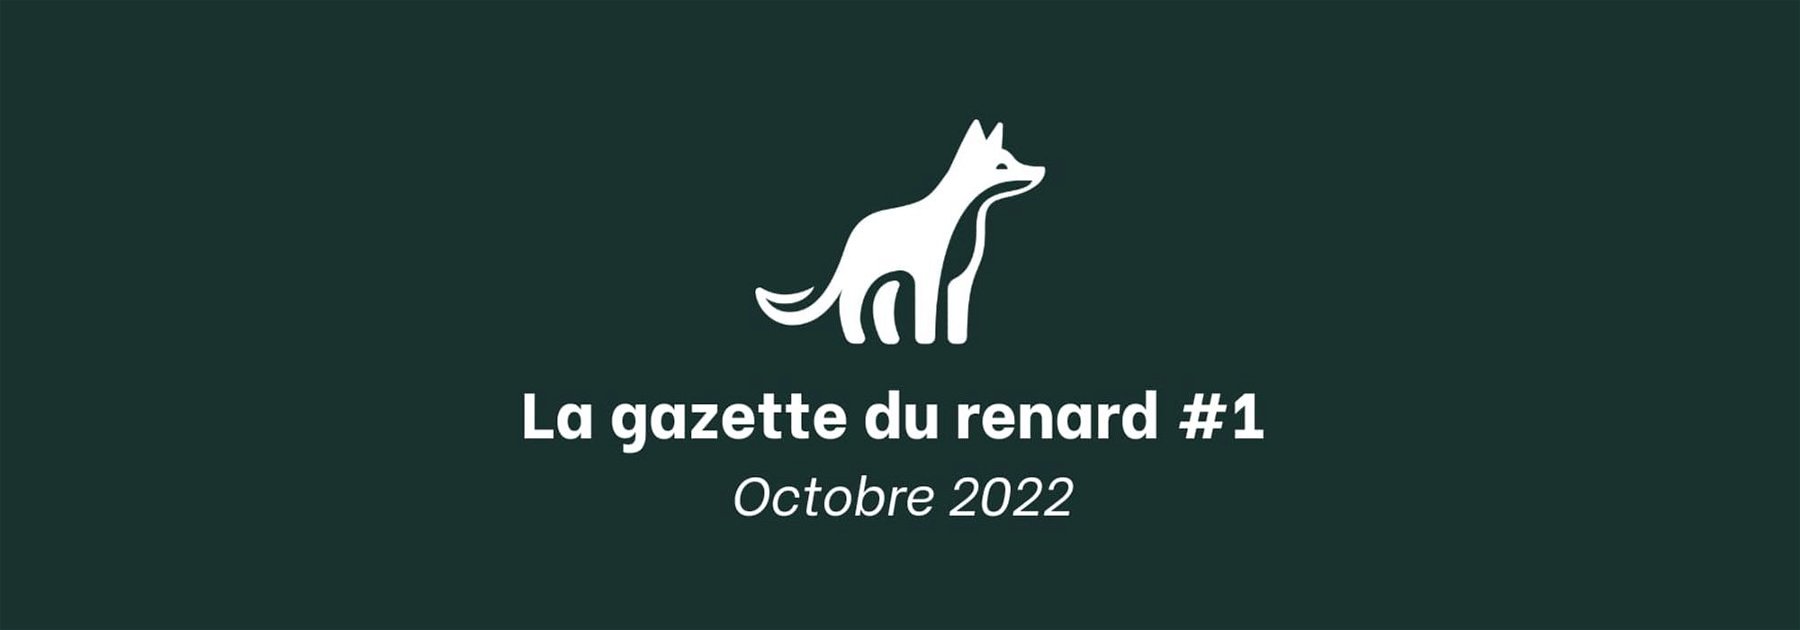 La Gazette du Renard #1 - Octobre 2022